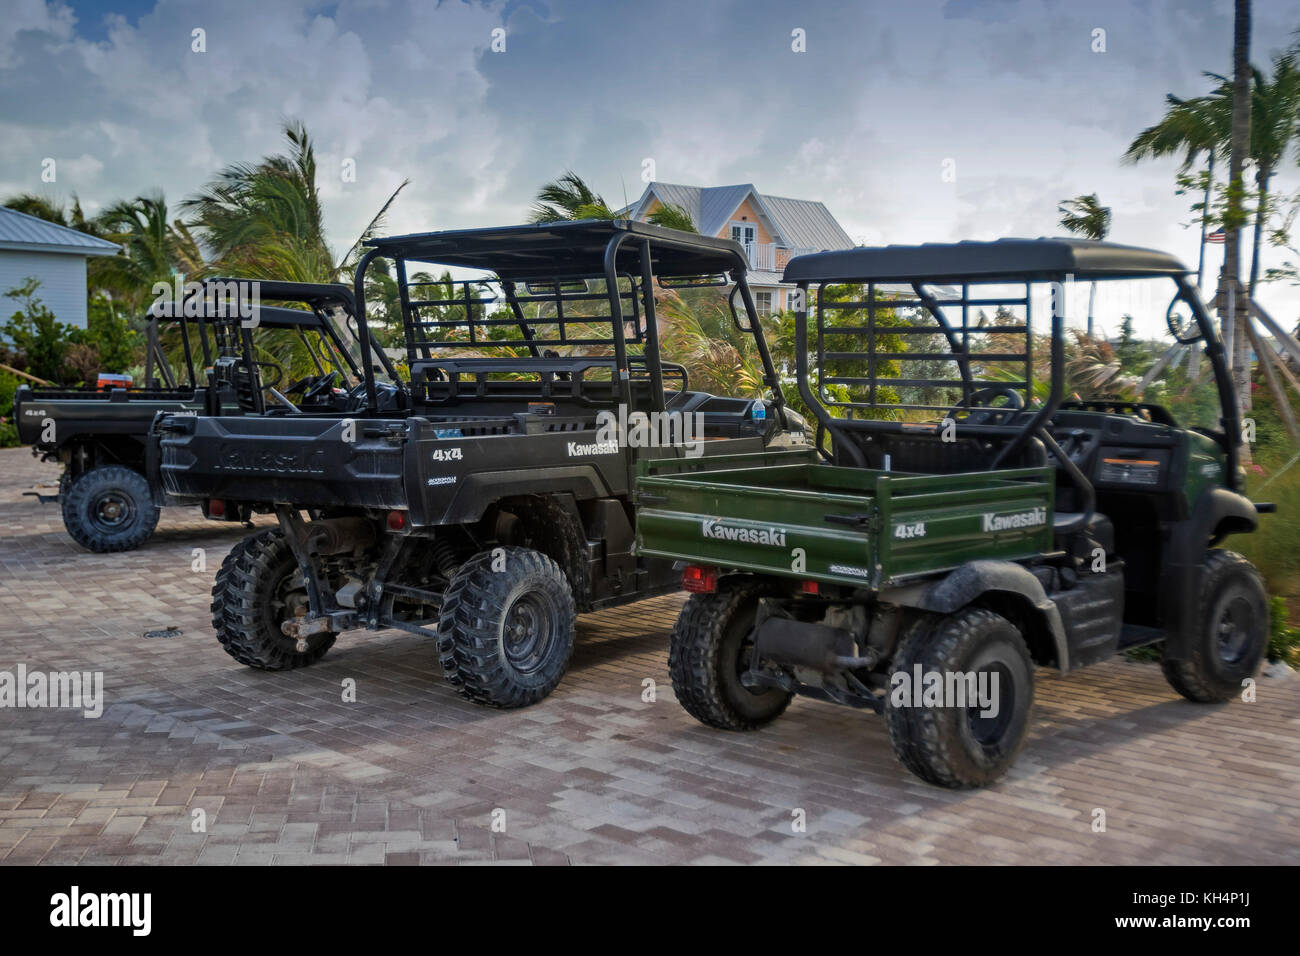 4 wheel drive golf carts for transportation Stock Photo